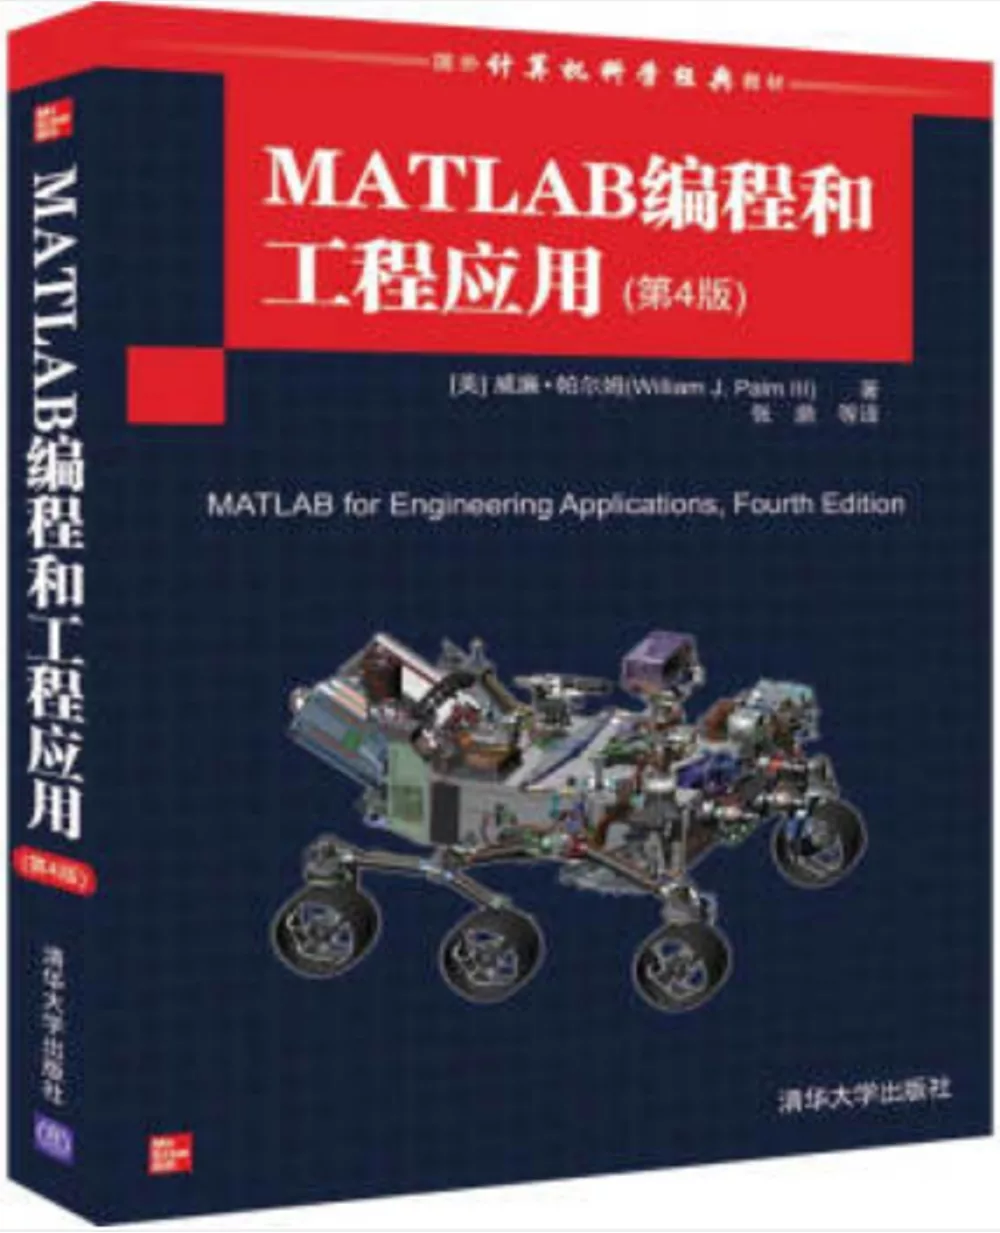 MATLAB編程和工程應用(第4版)